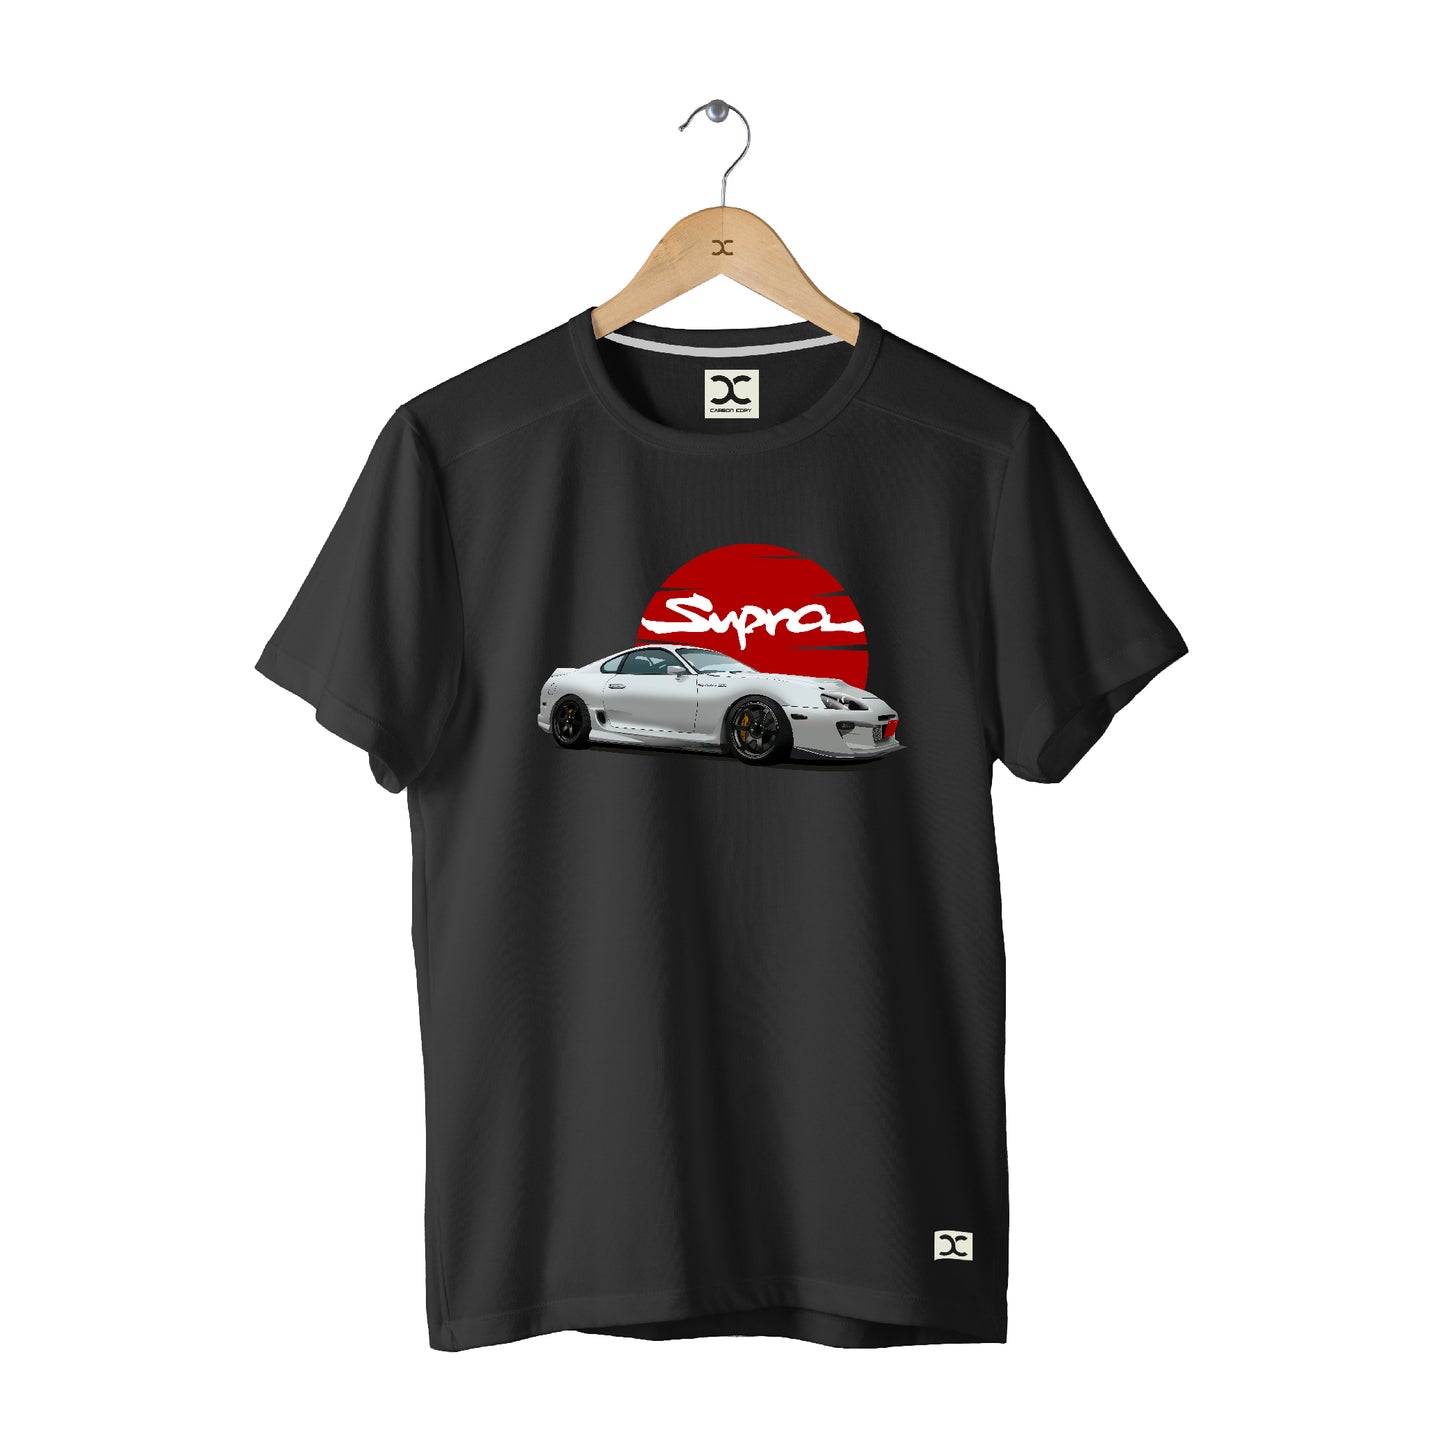 Honda Toyota Supra | CARBON-COPY | Premium Smart-Fit | Unisex T-Shirt| Black T-Shirt